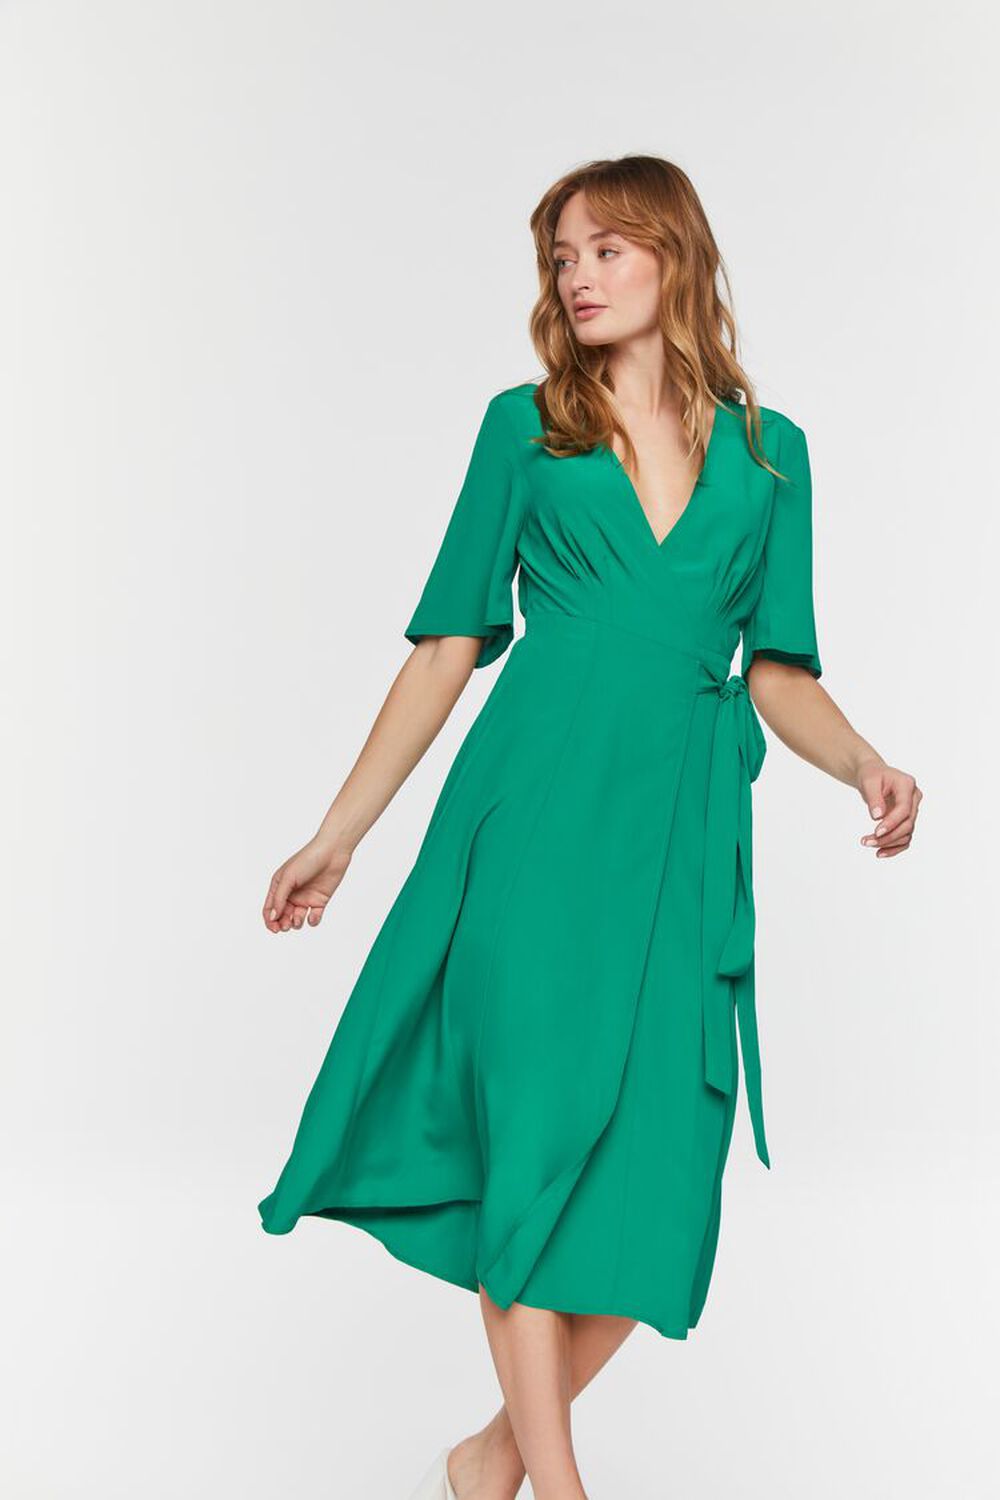 GREEN Crepe Midi Wrap Dress, image 1